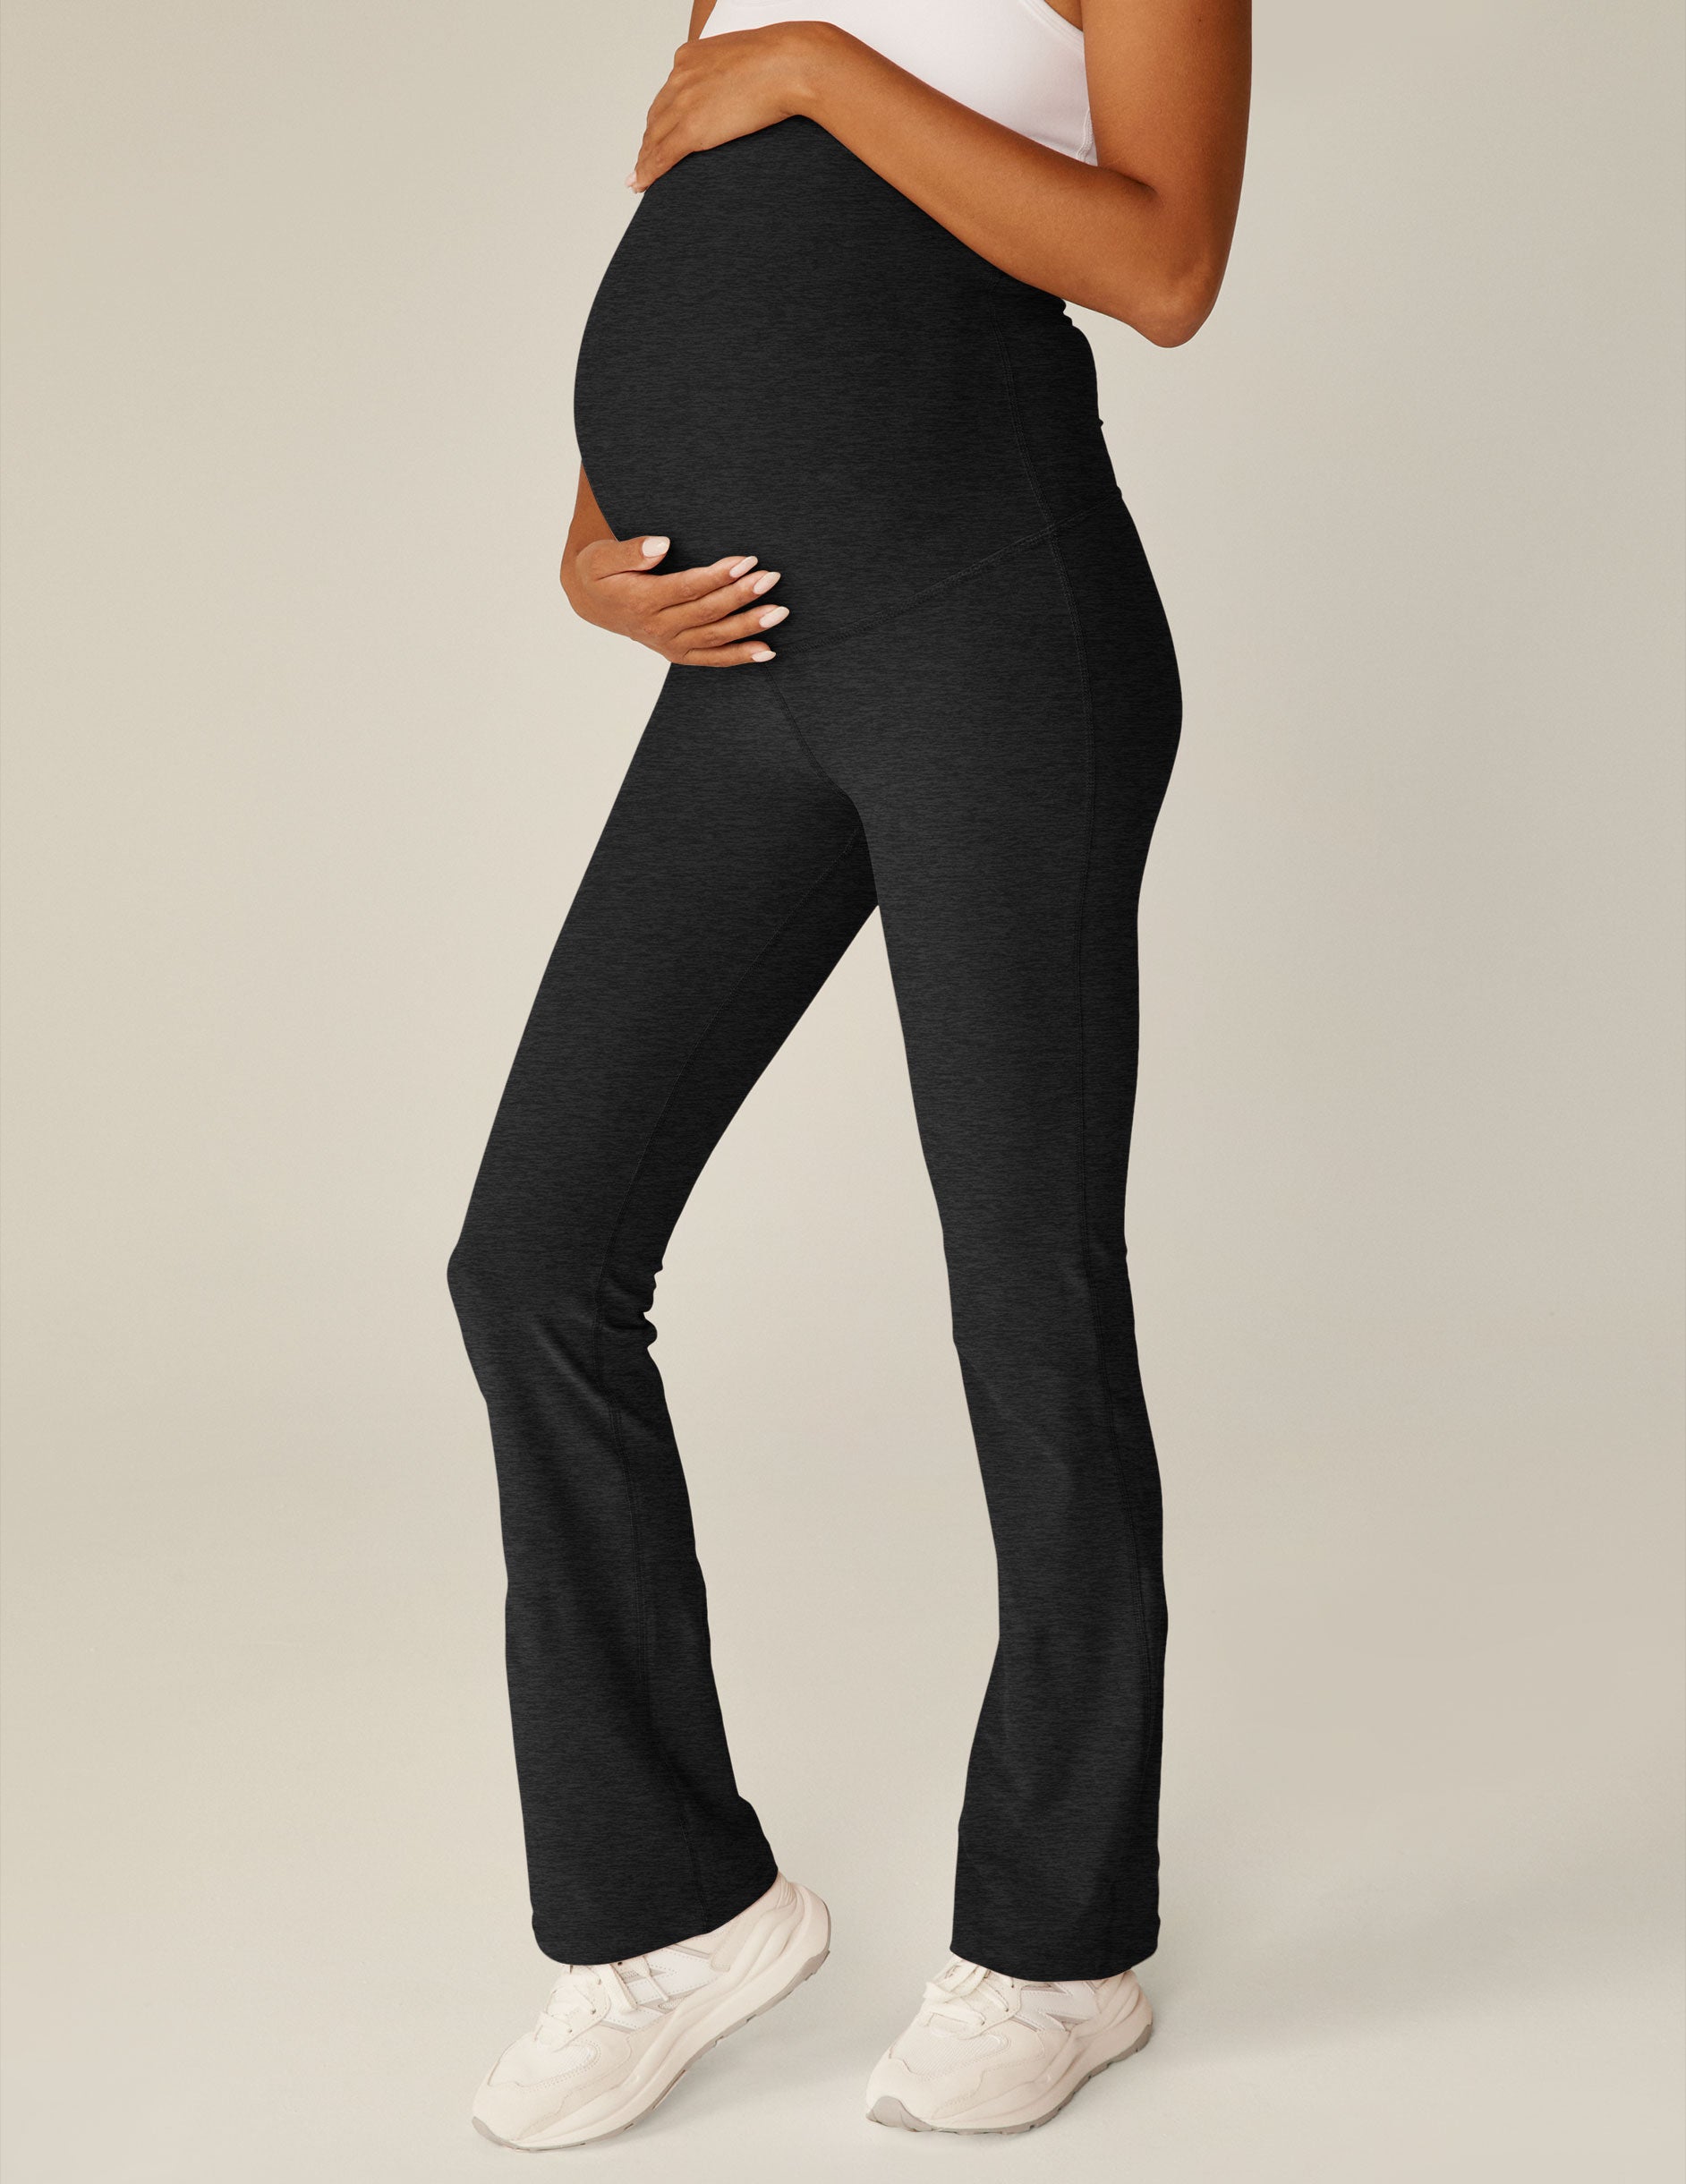 Beyond Yoga Maternity Spacedye Out of Pocket High-Waisted Midi Leggings  Darkest Night XL (US Women's 14-16) 21